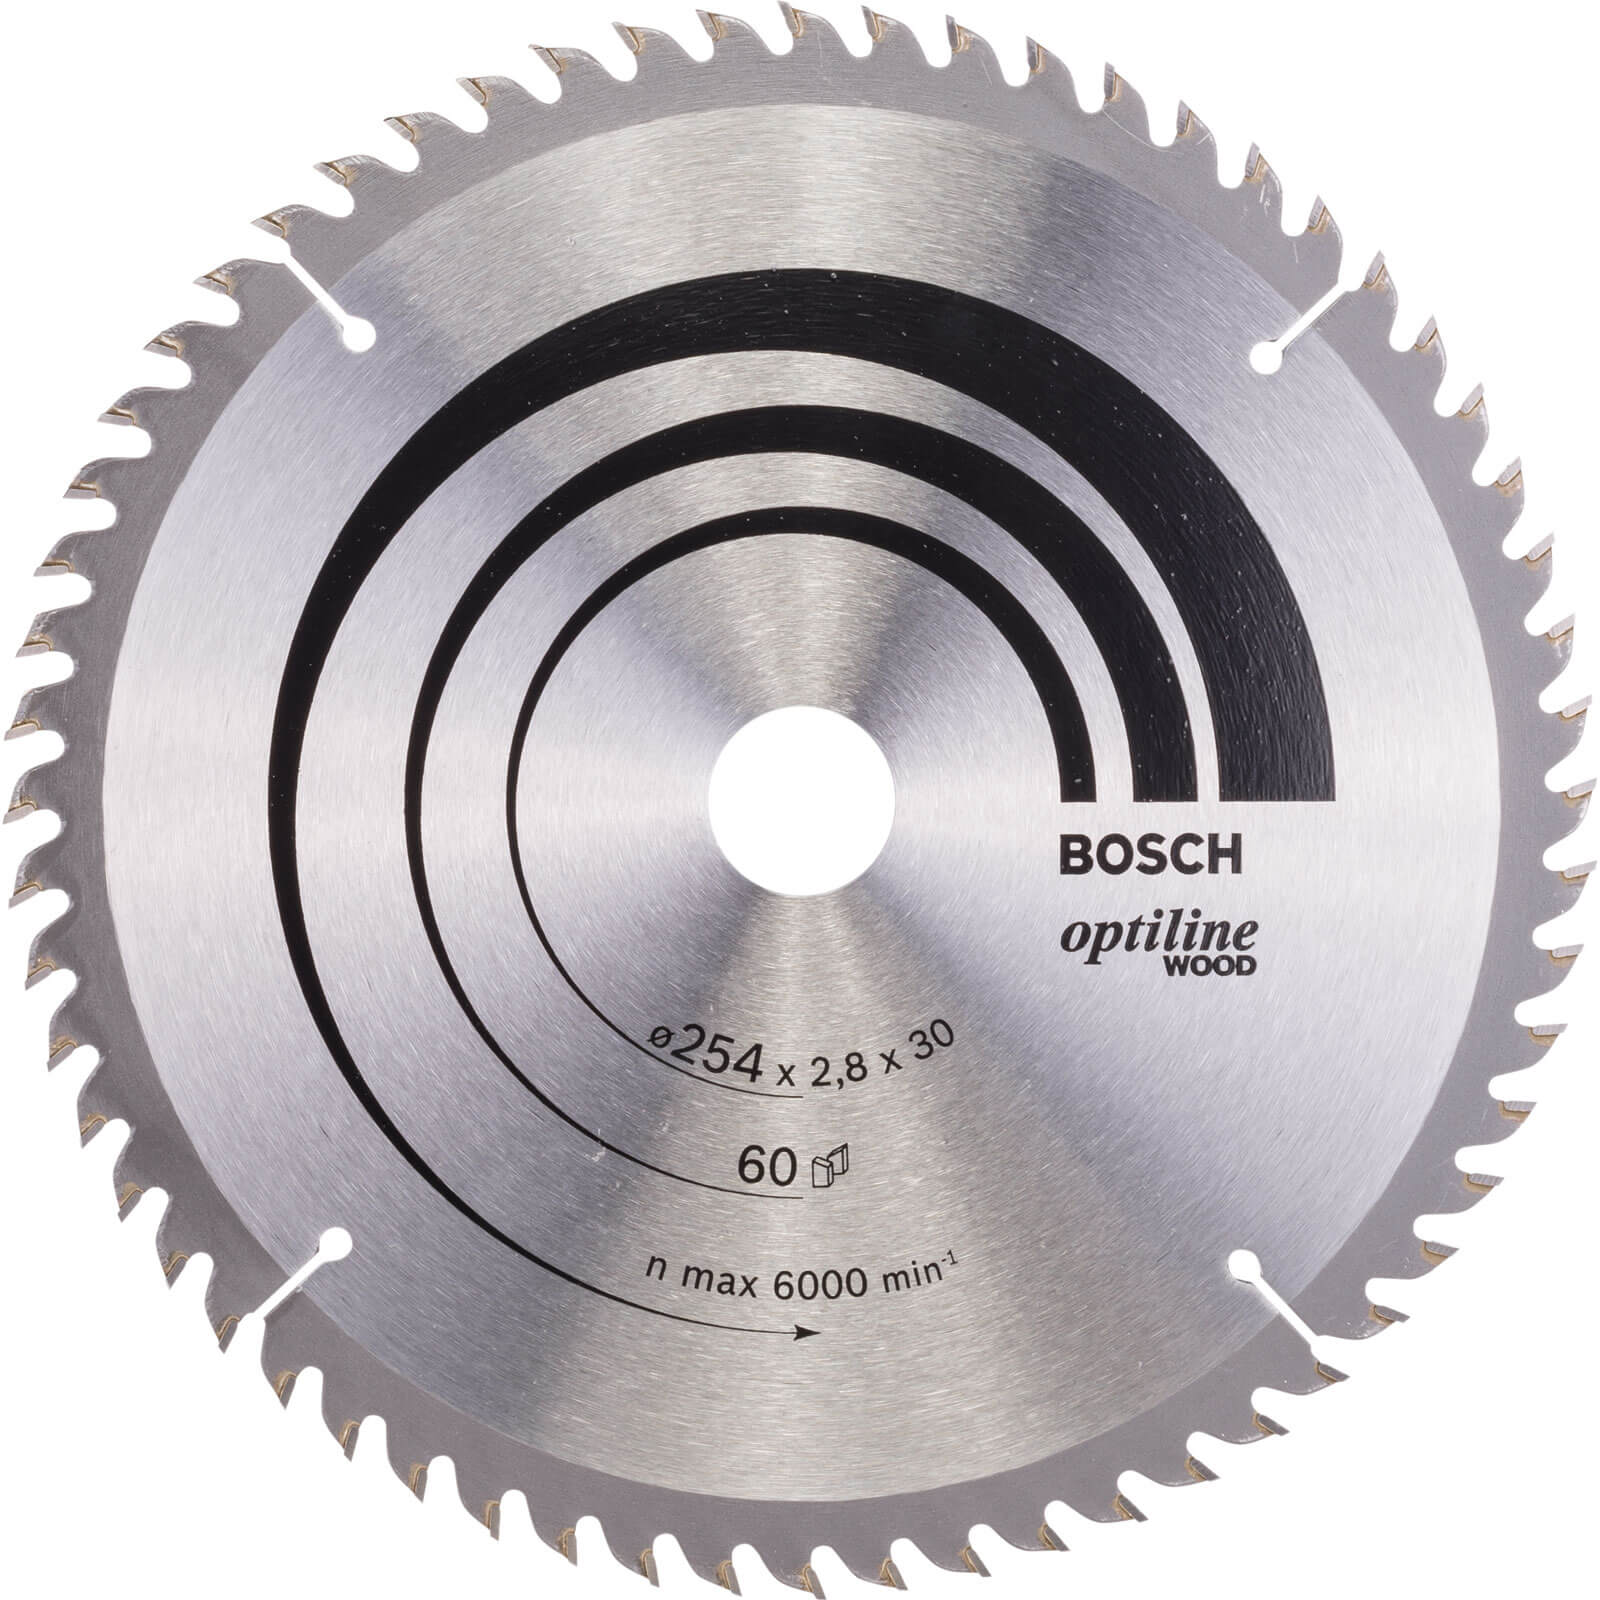 Photo of Bosch Optiline Wood Cutting Mitre Saw Blade 254mm 60t 30mm